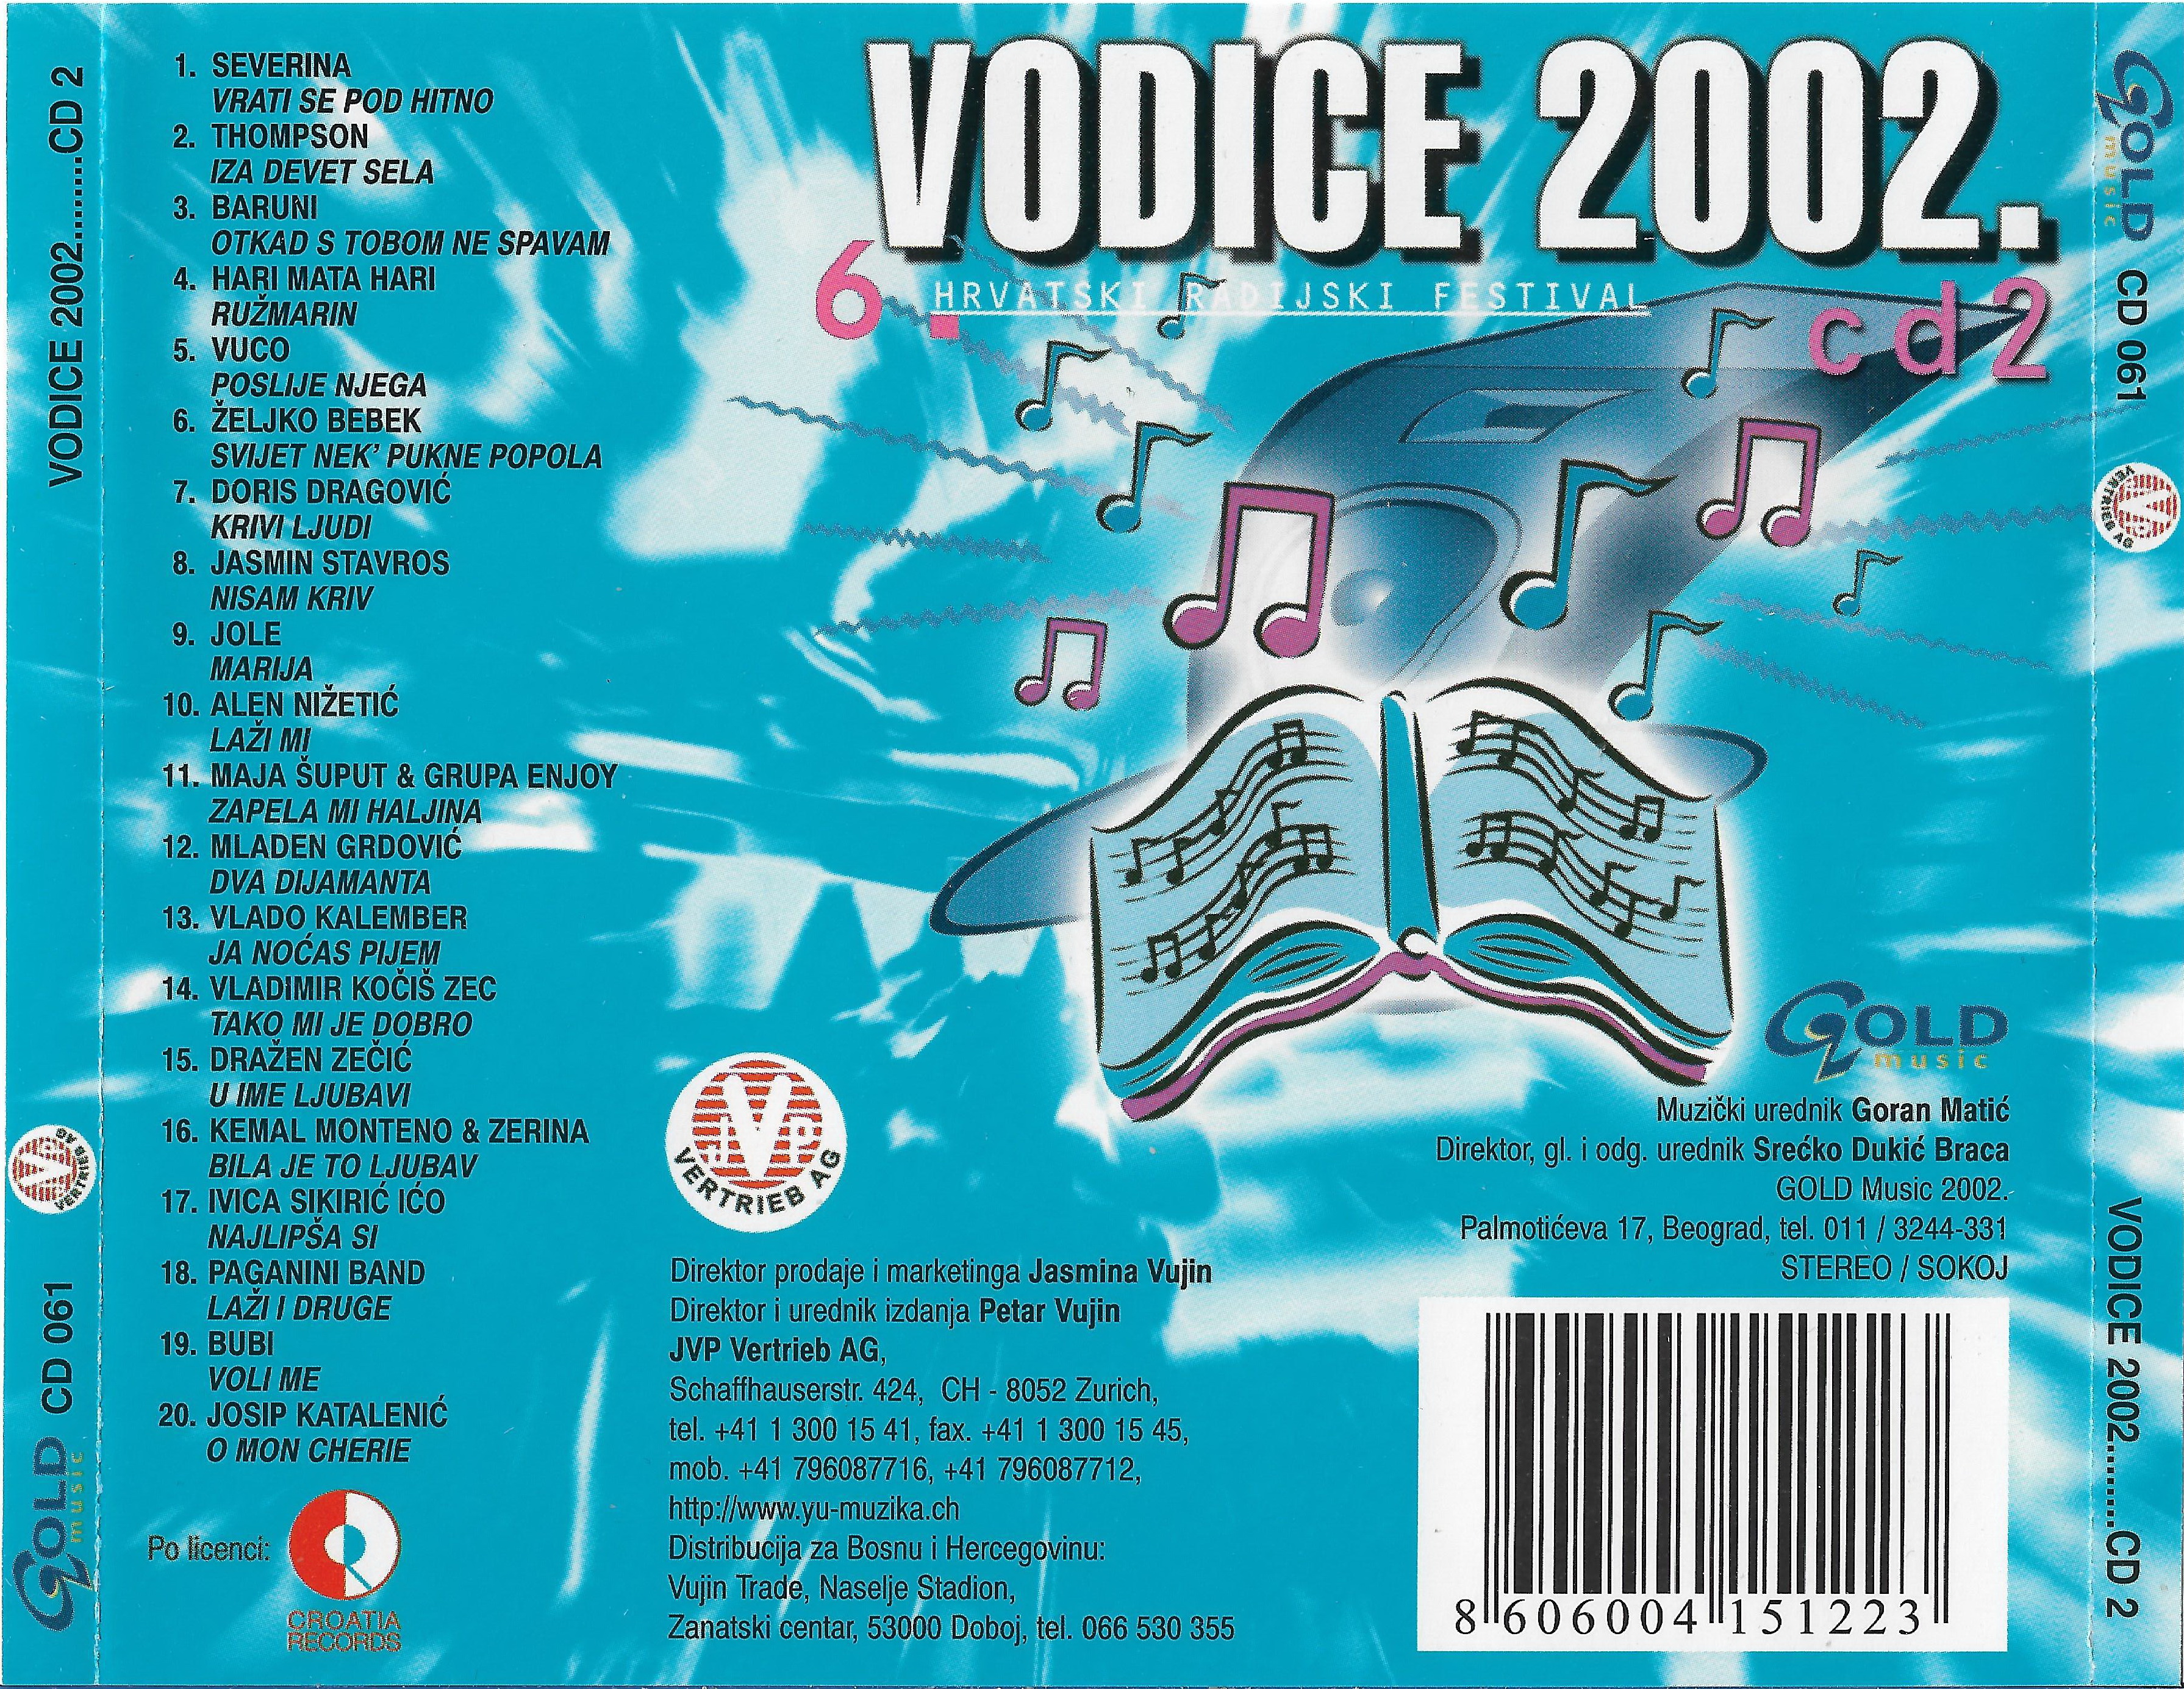 Vodice 2002 CD 2 3